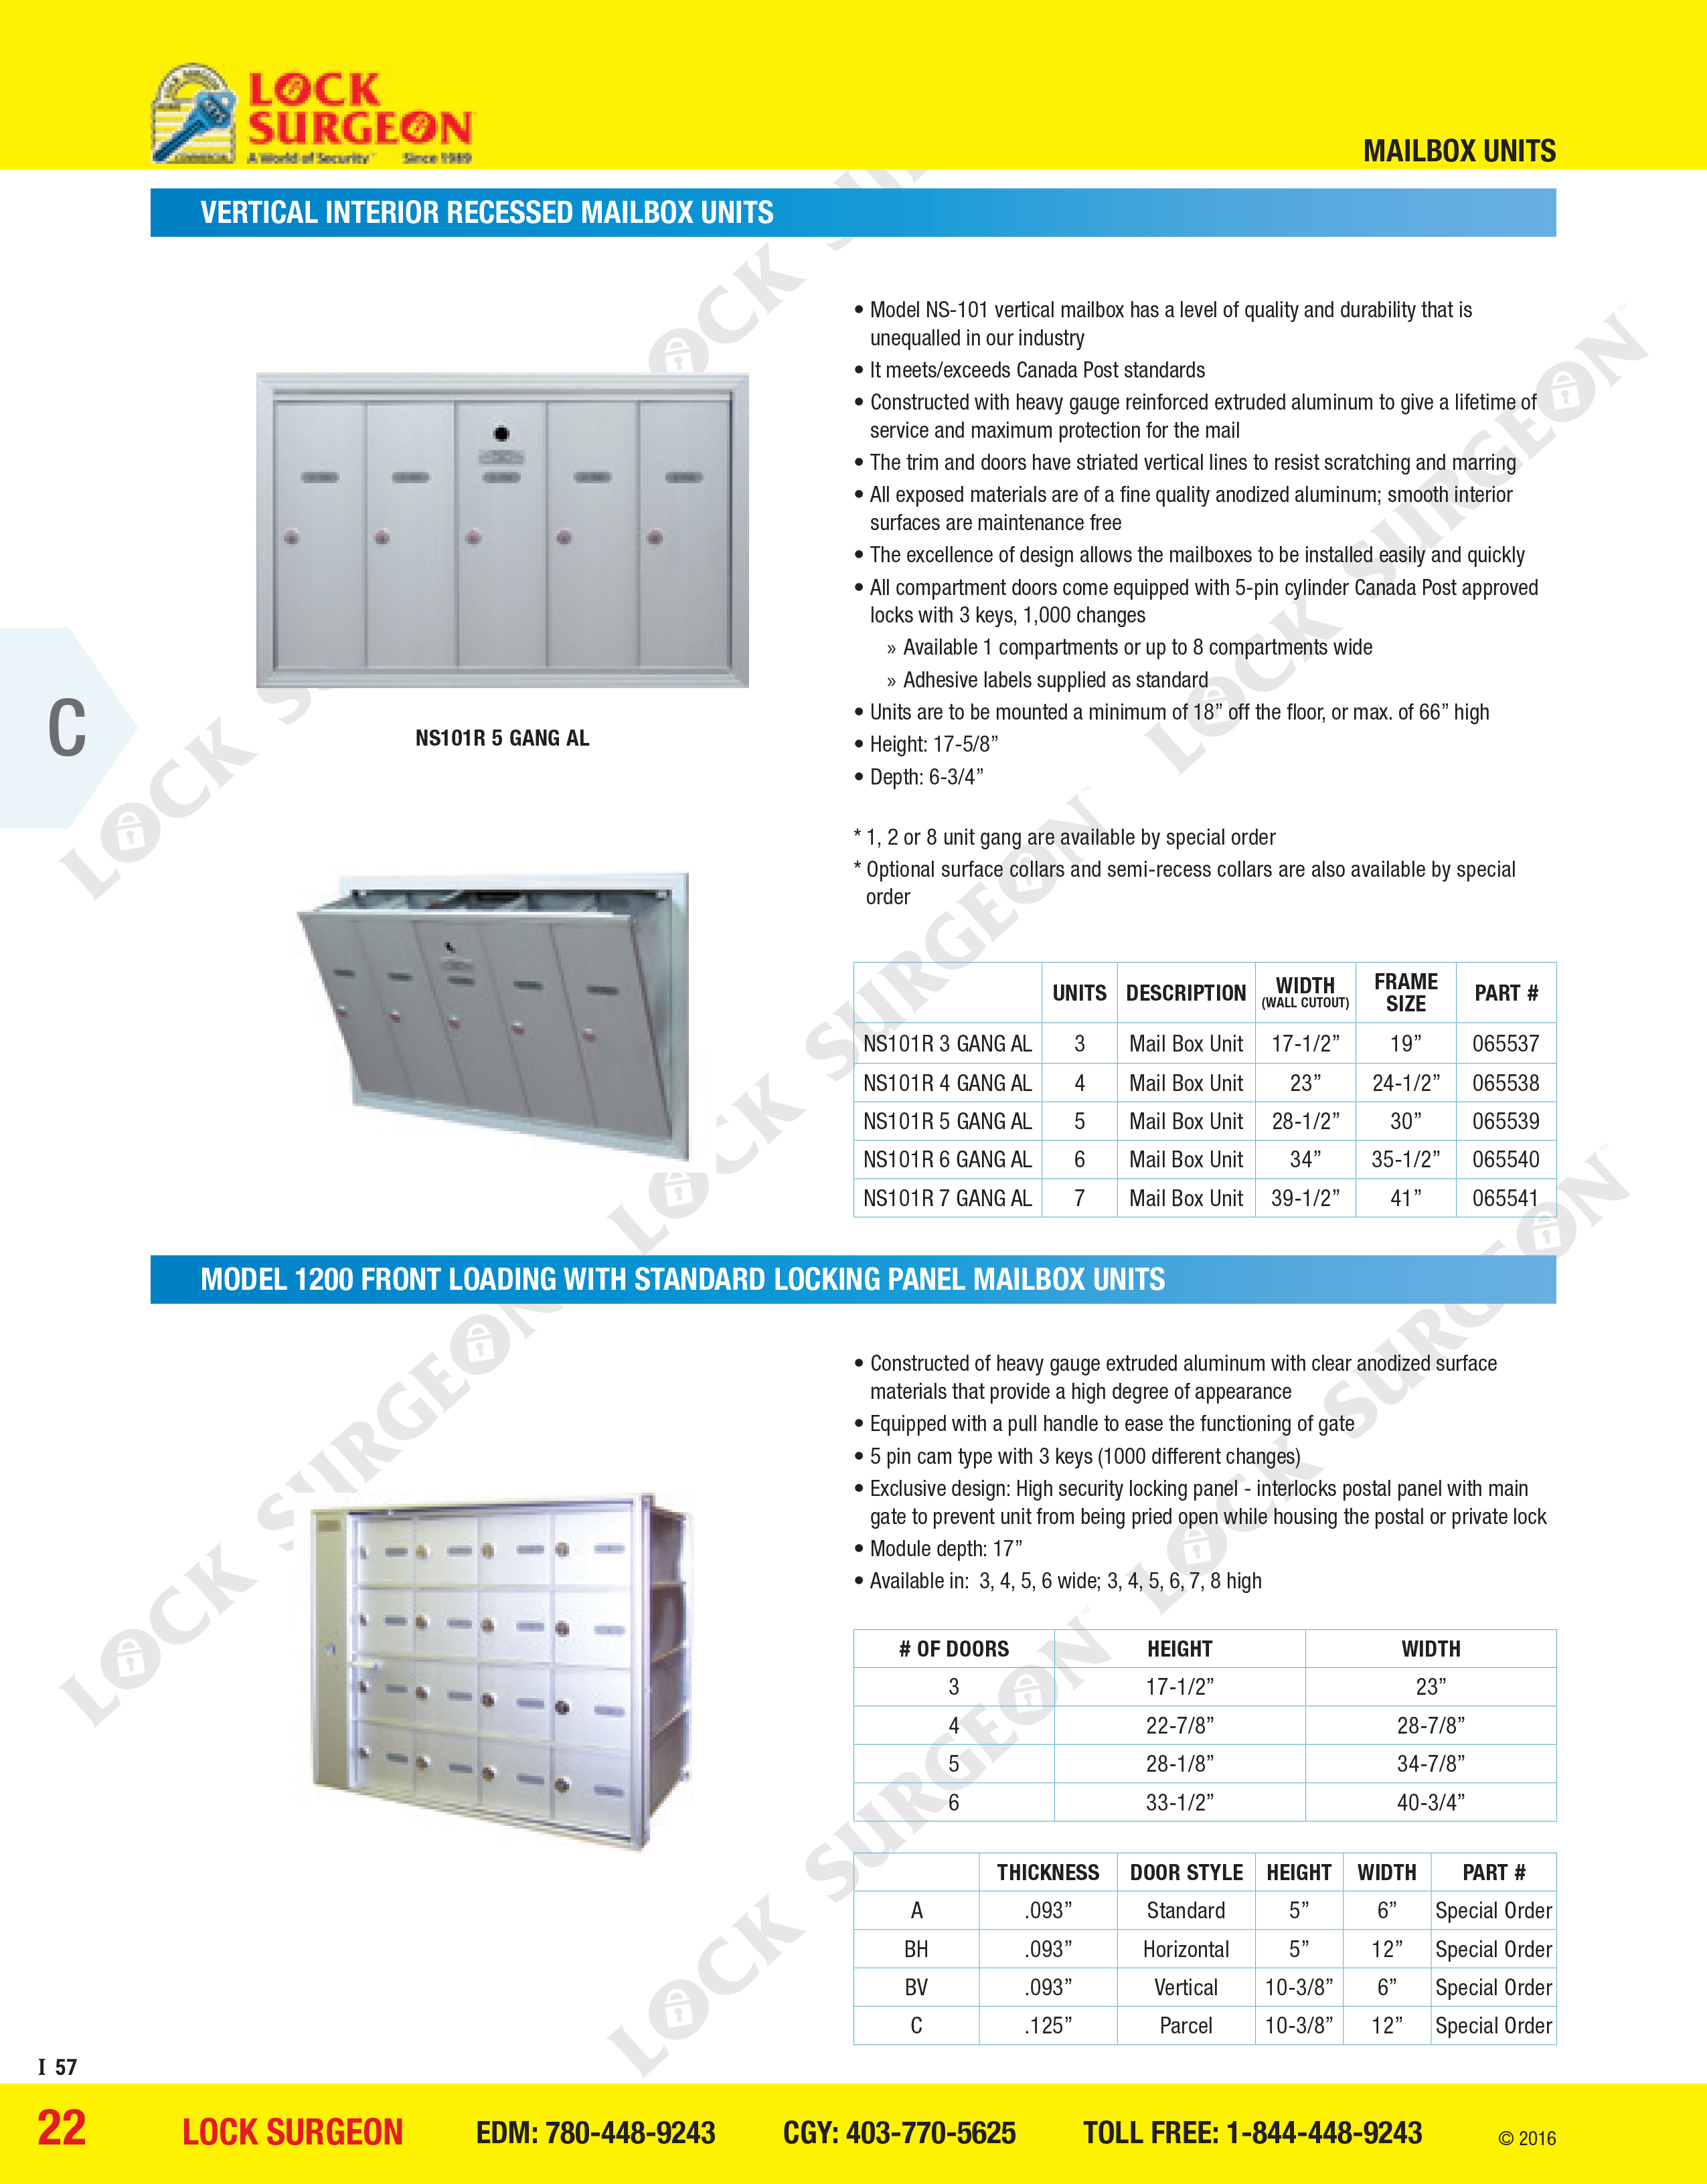 Vertical interior recessed mailbox Model 1200 front loading standard locking panel mailbox units.